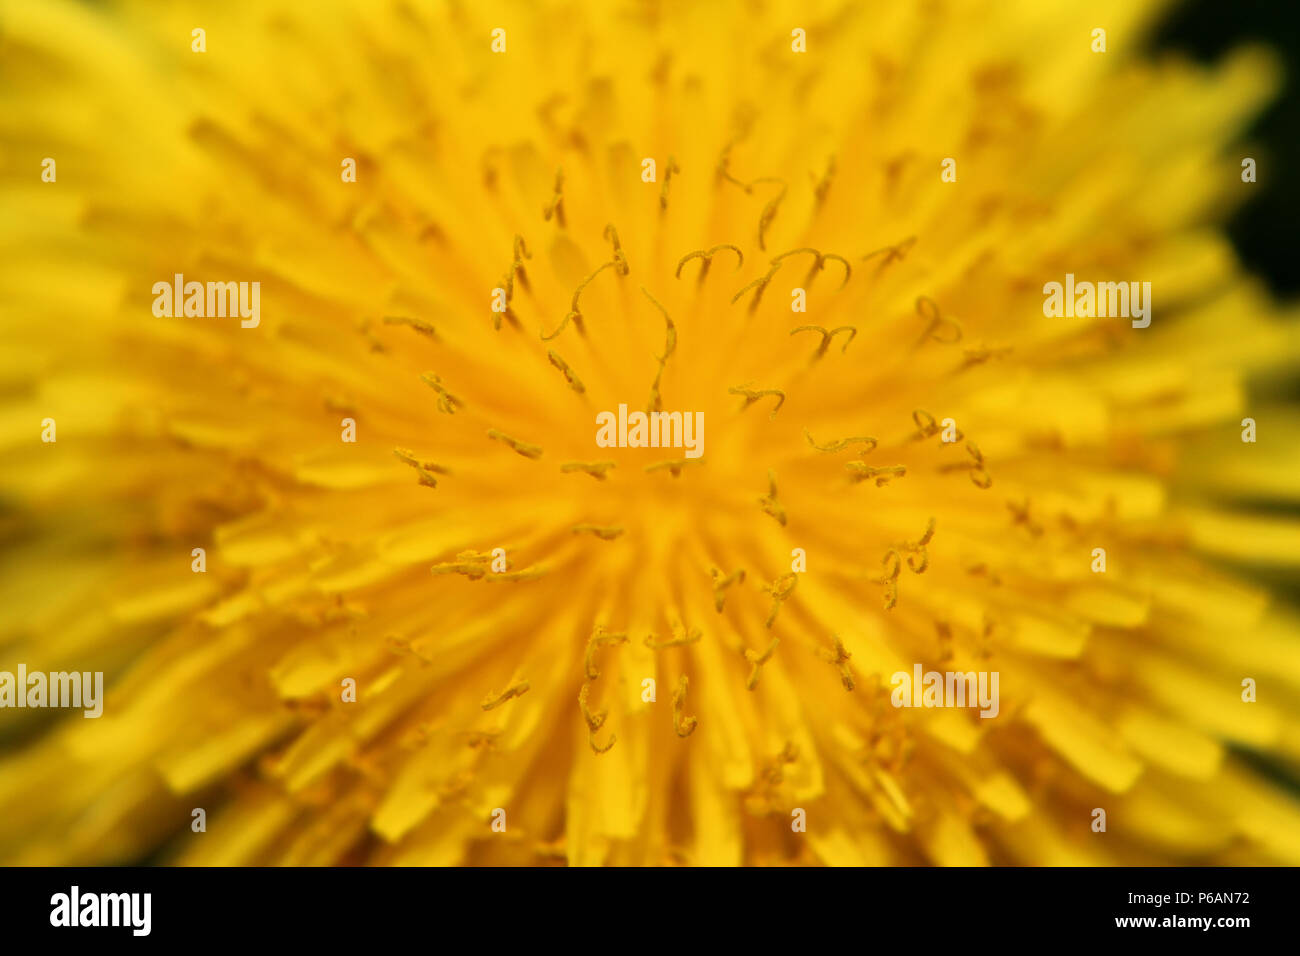 Close up of pollen covered stigmas of a common dandelion (Taraxacum officinale) flower head Stock Photo